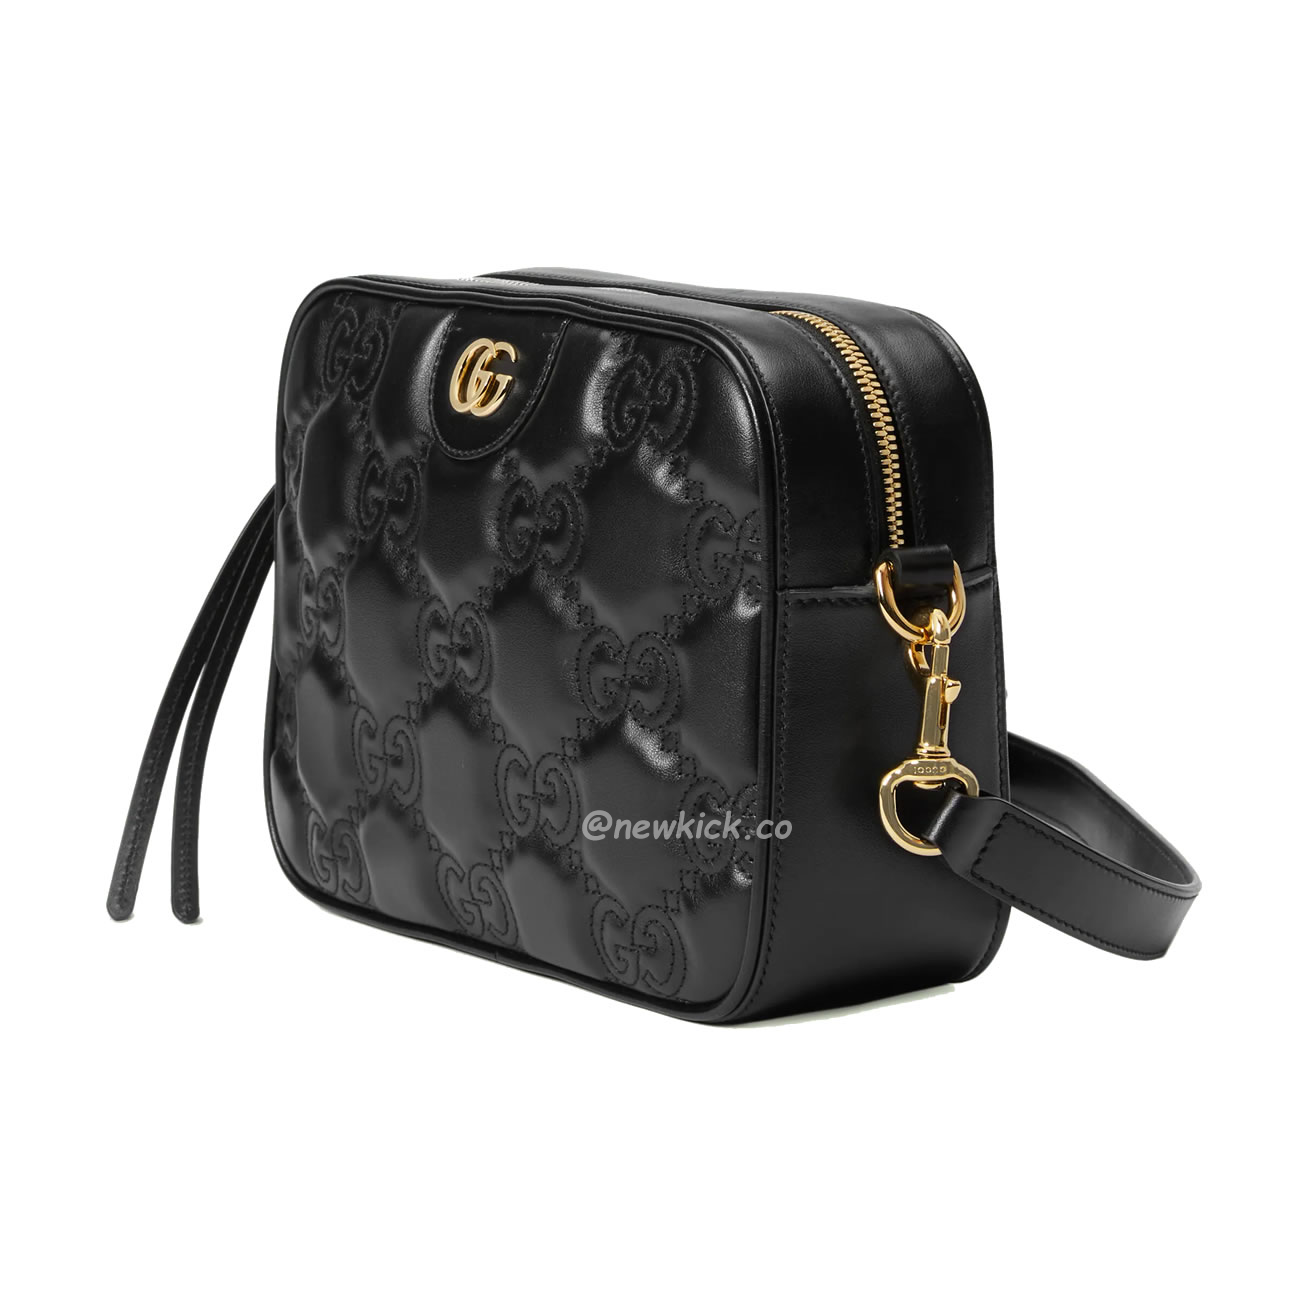 Gucci Gg Matelass Small Bag Product Details 702234 Um8hg 1046 (1) - newkick.org